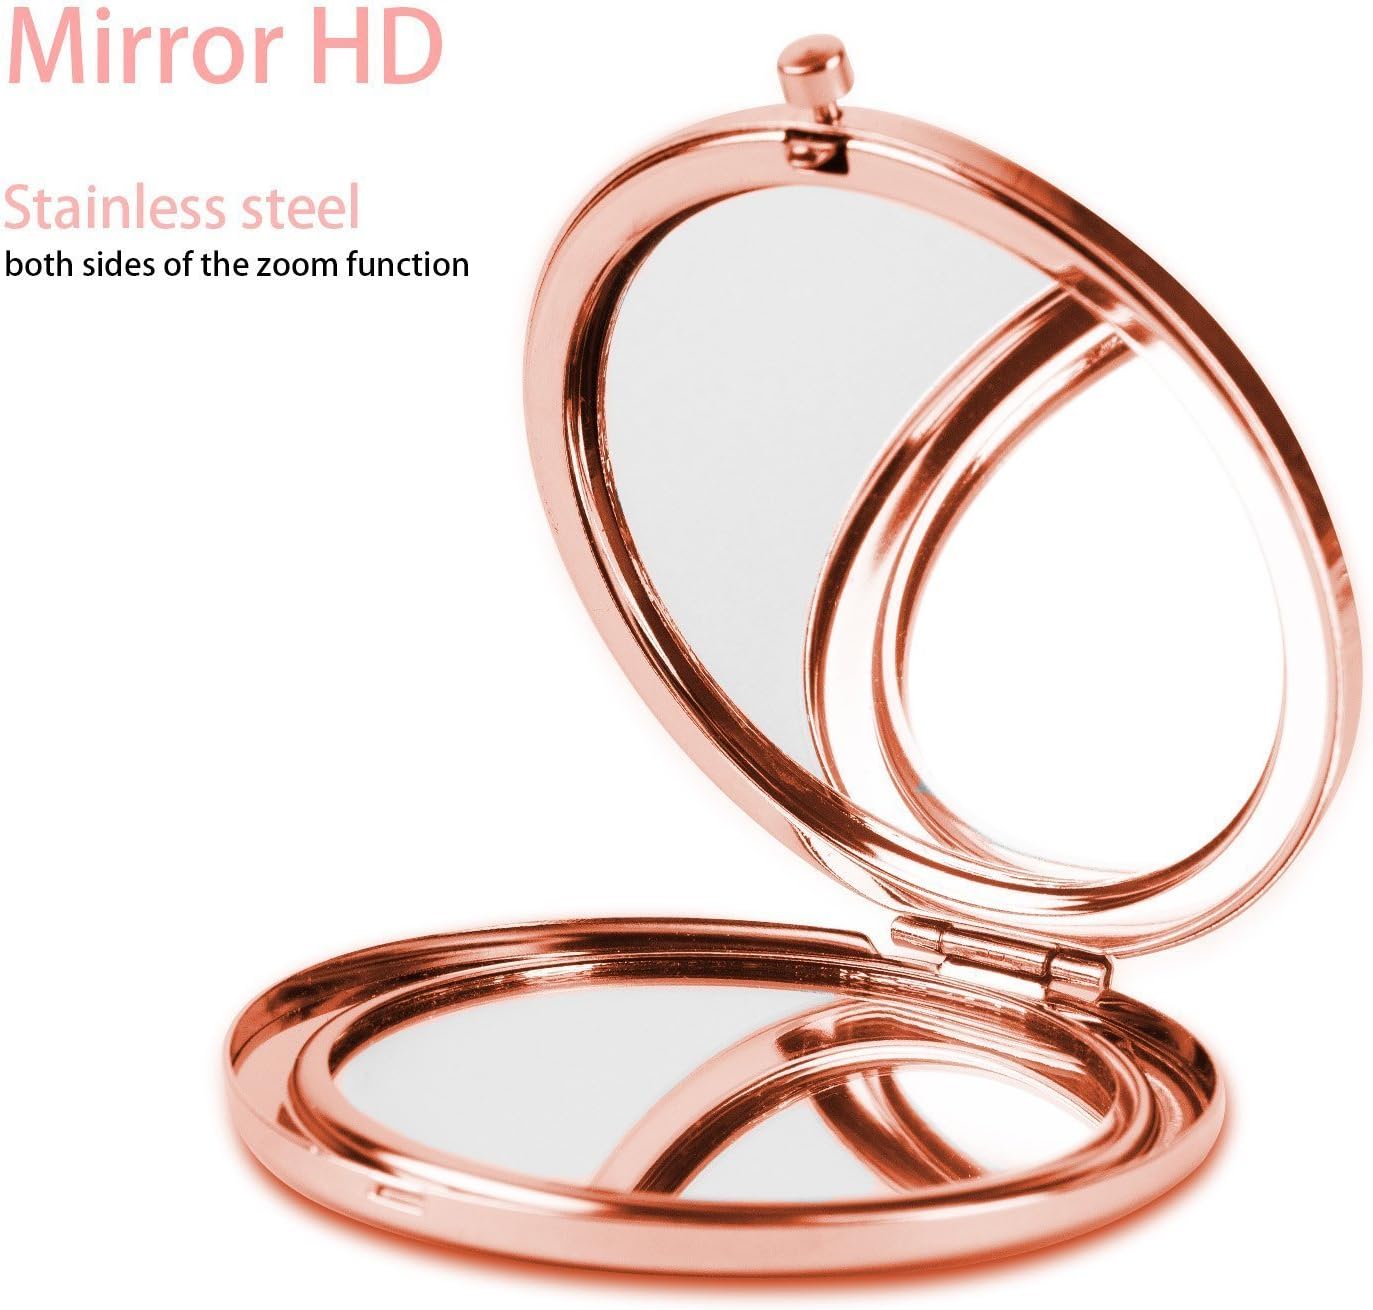 pzicase, Espejo compacto redondo de oro rosa, espejo de maquillaje, mini espejo